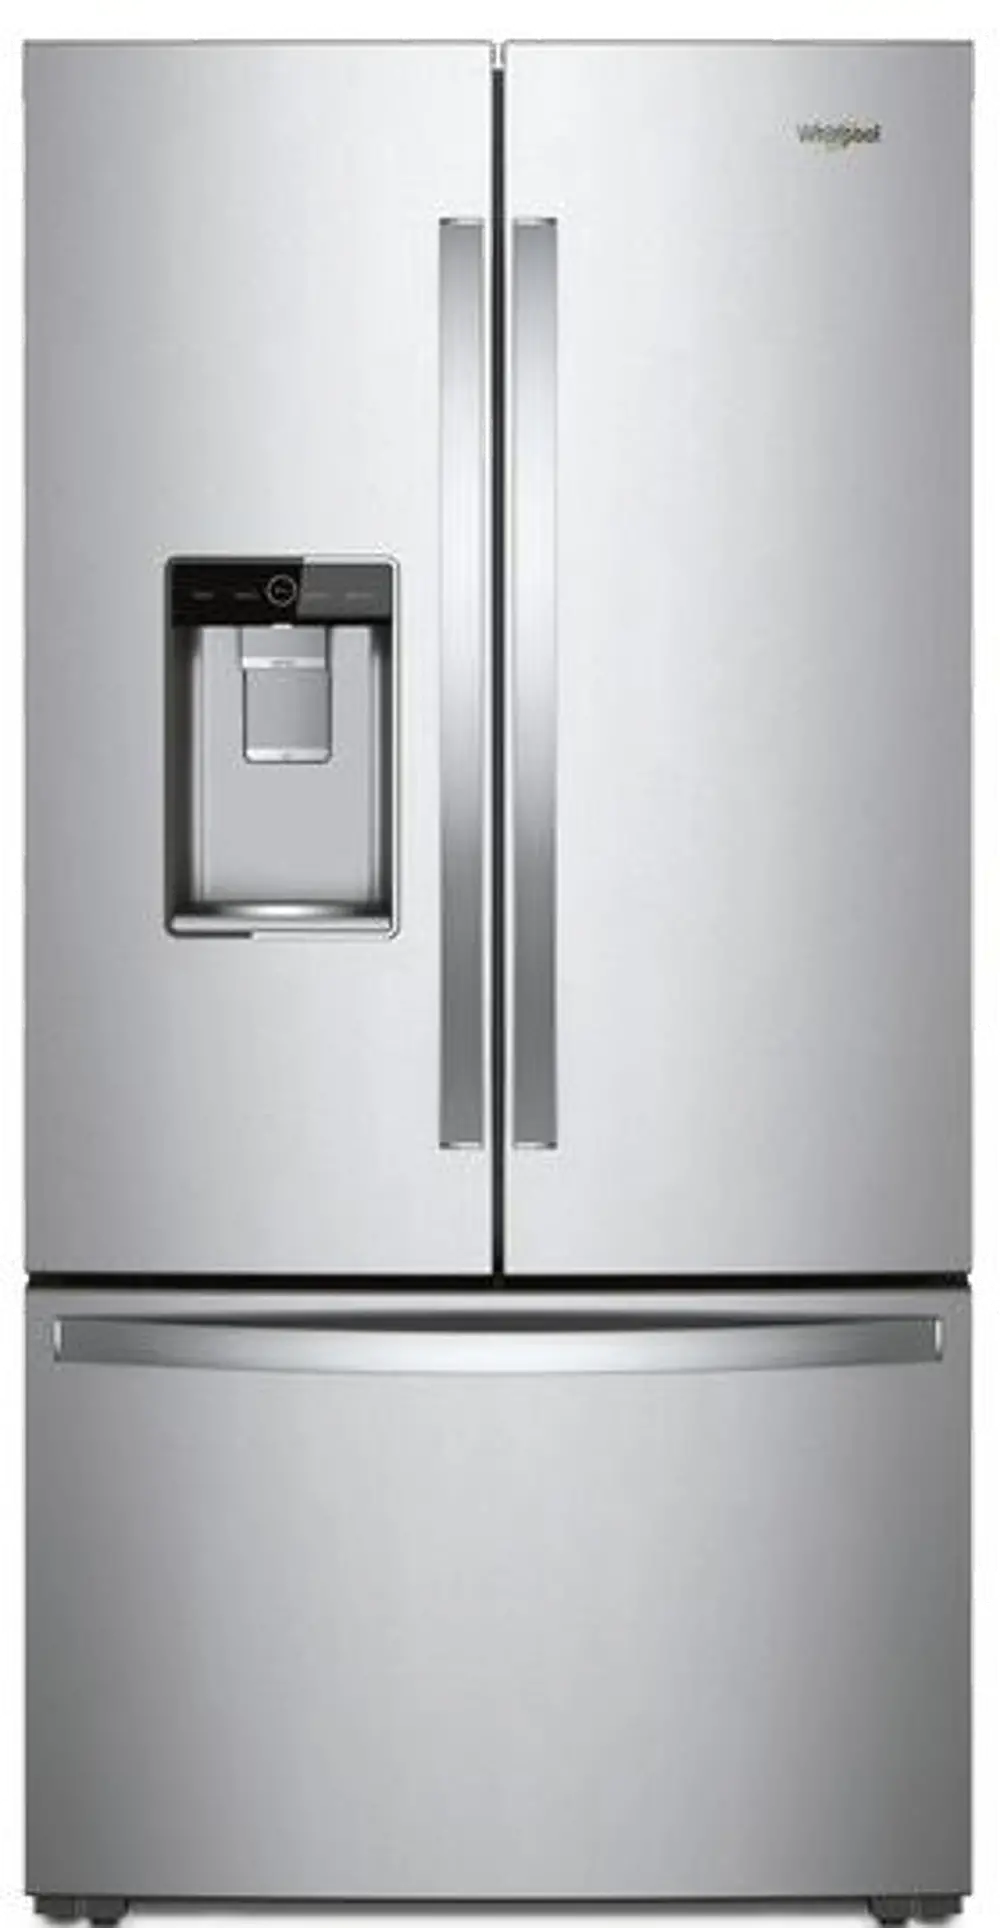 WRF954CIHM Whirlpool French Door Refrigerator - 36 Inch Counter Depth - Stainless Steel-1